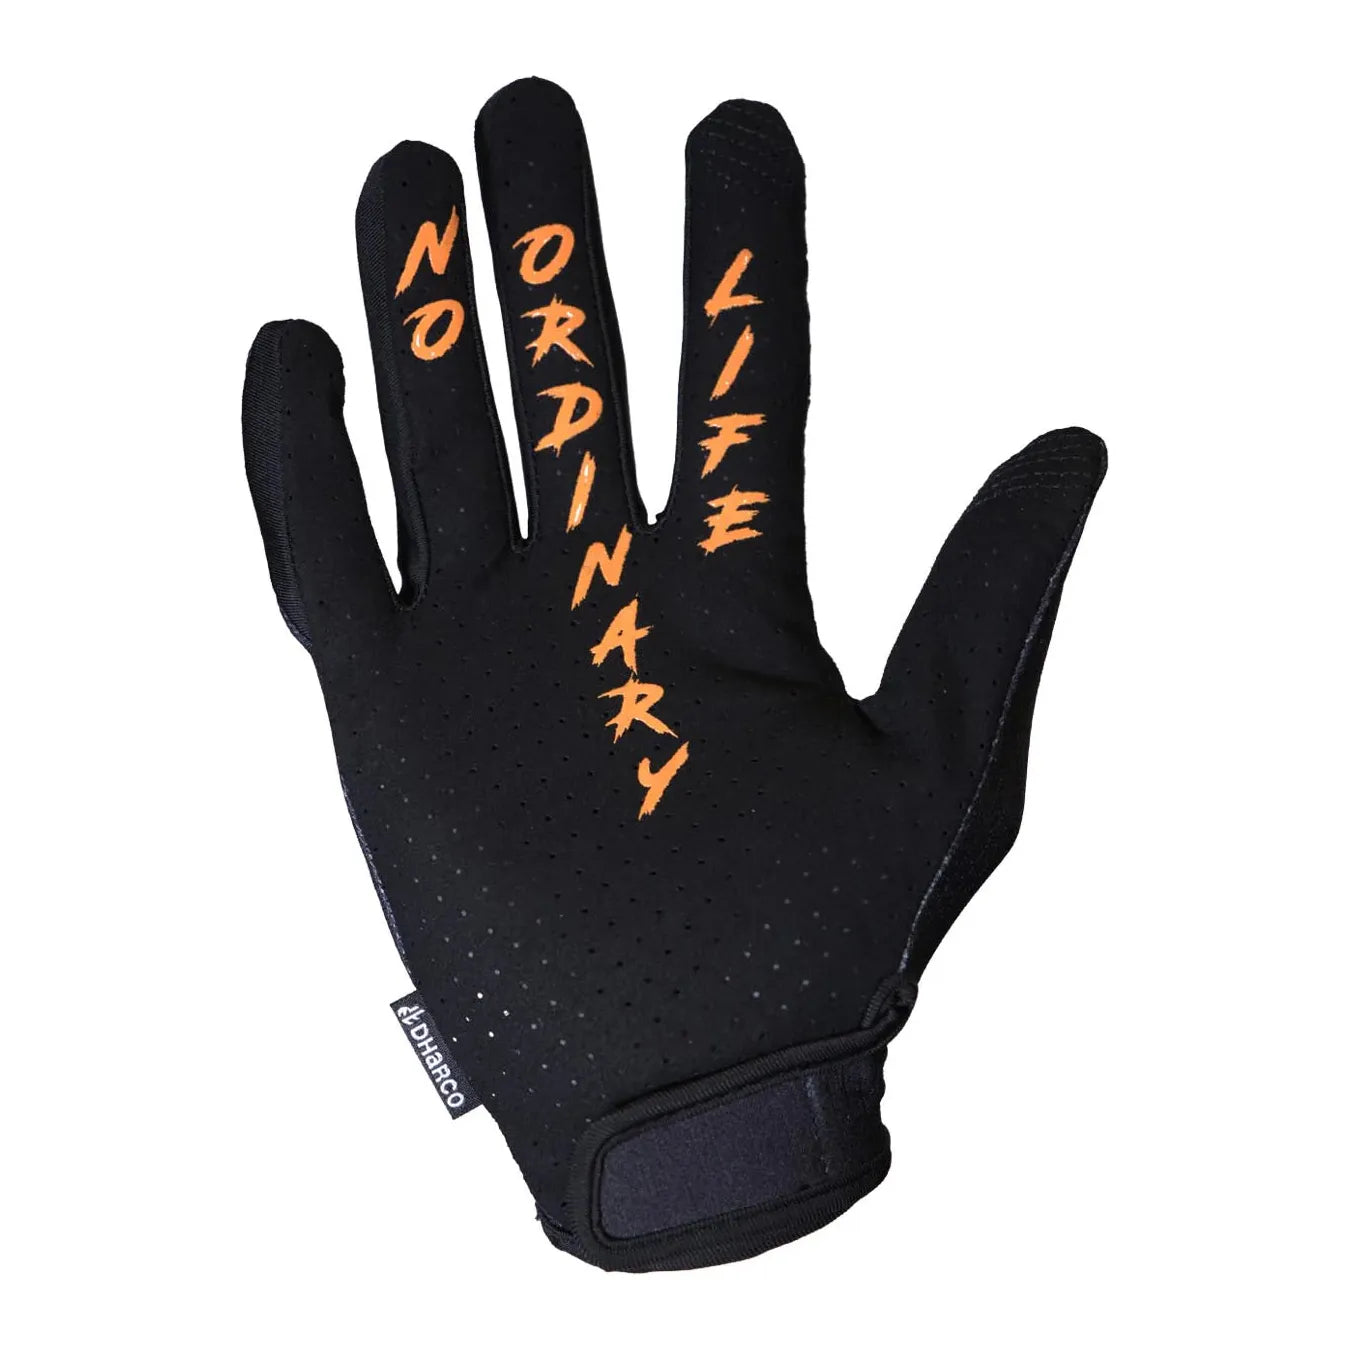 DHaRCO Men's Race Gloves - L - Black